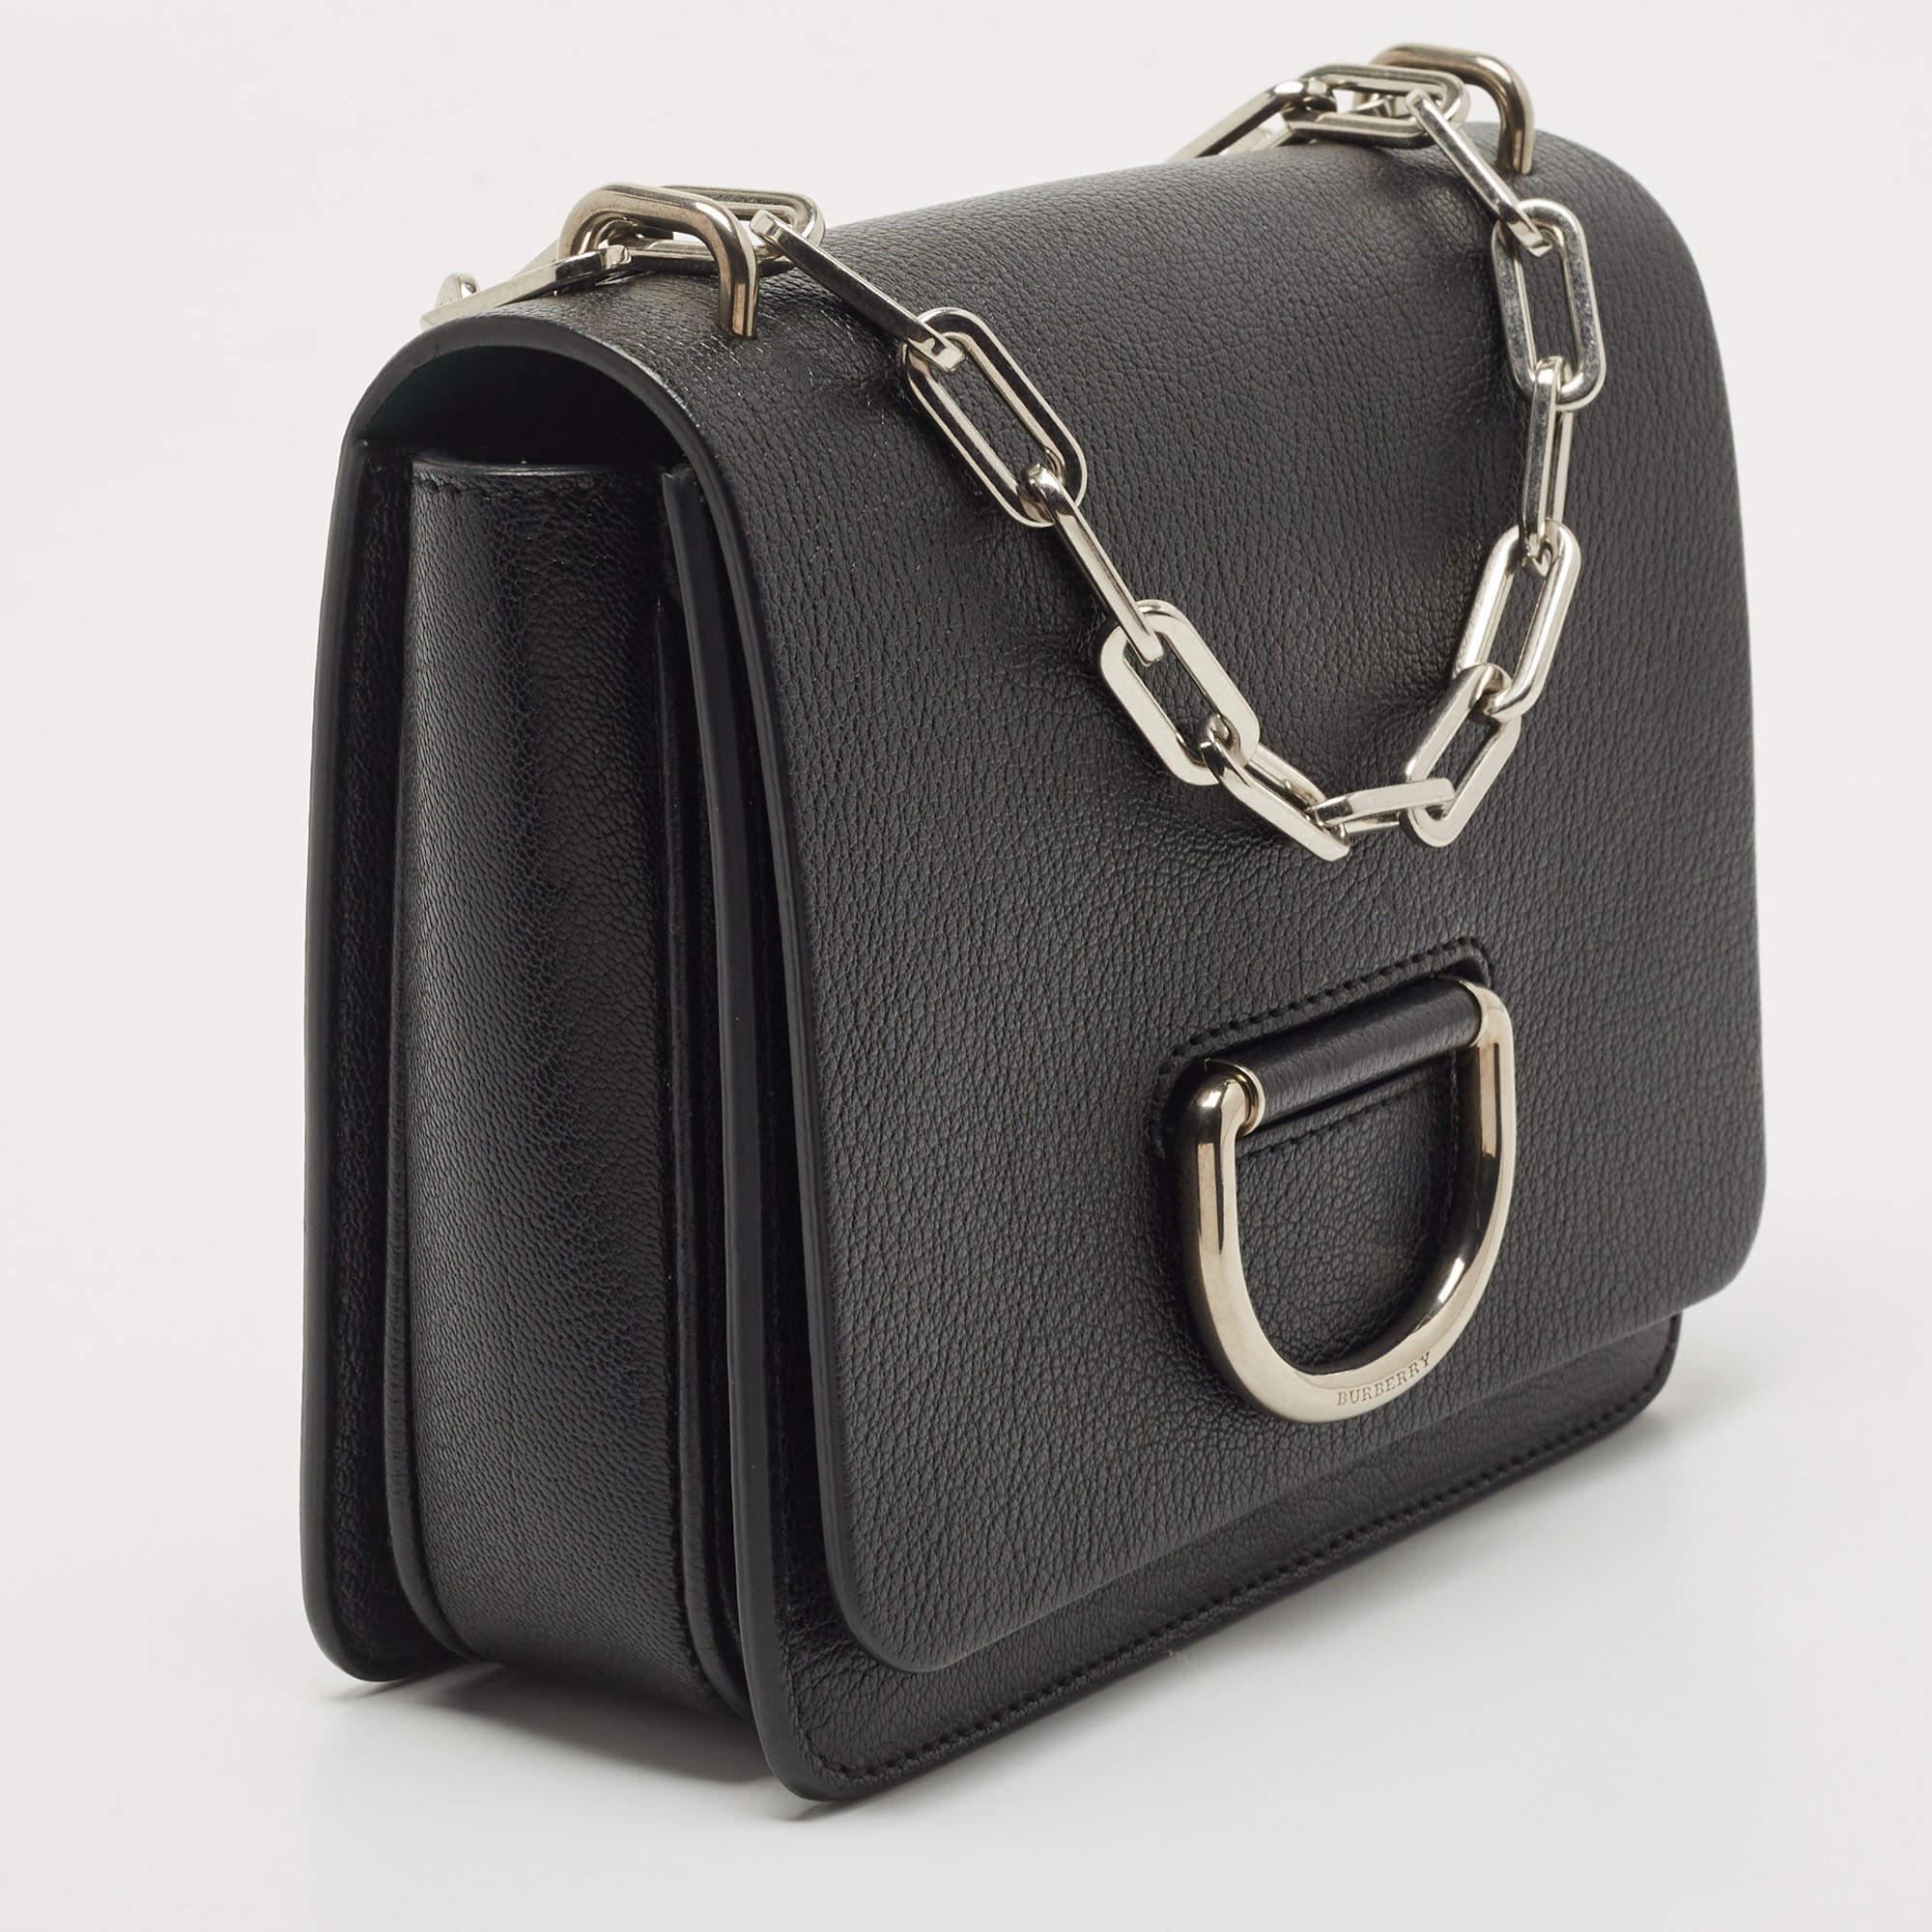 Women's or Men's Burberry Black Leather Small D Ring Shoulder Bag